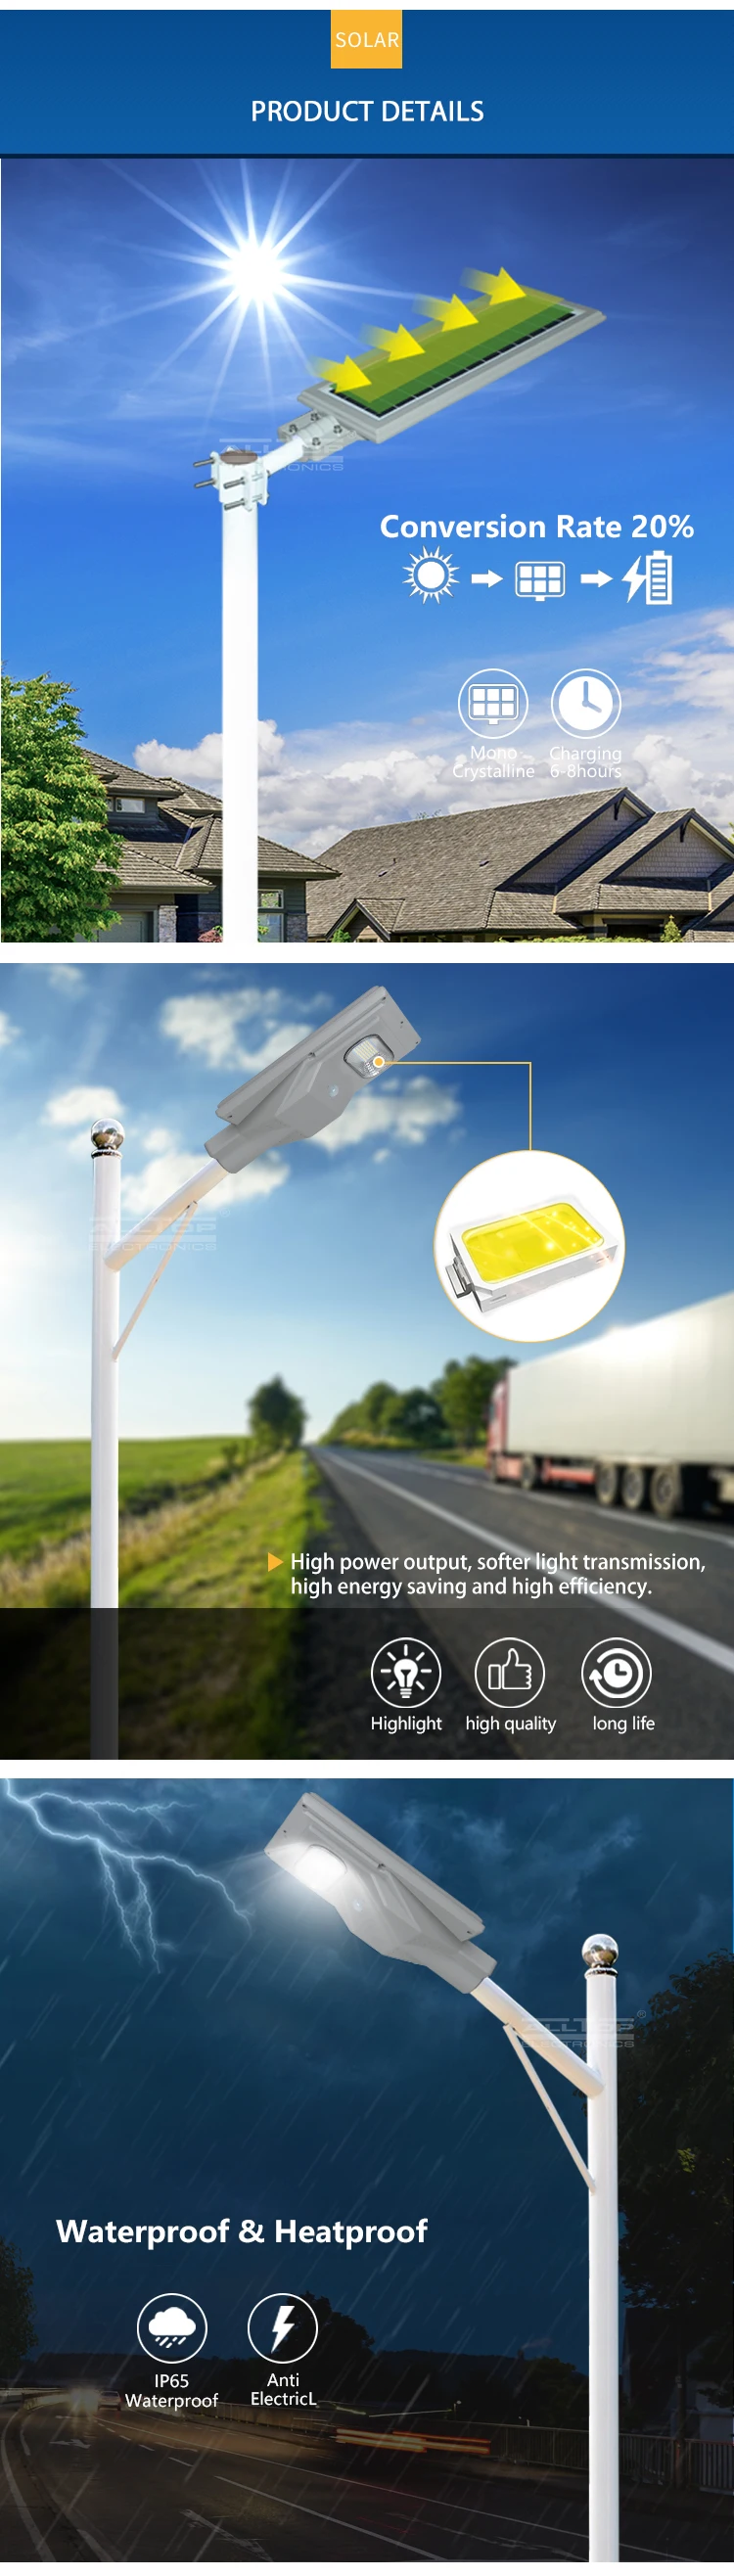 ALLTOP High quality aluminum alloy motion sensor SMD 30 60 90 120 150 watt all in one solar led streetlight